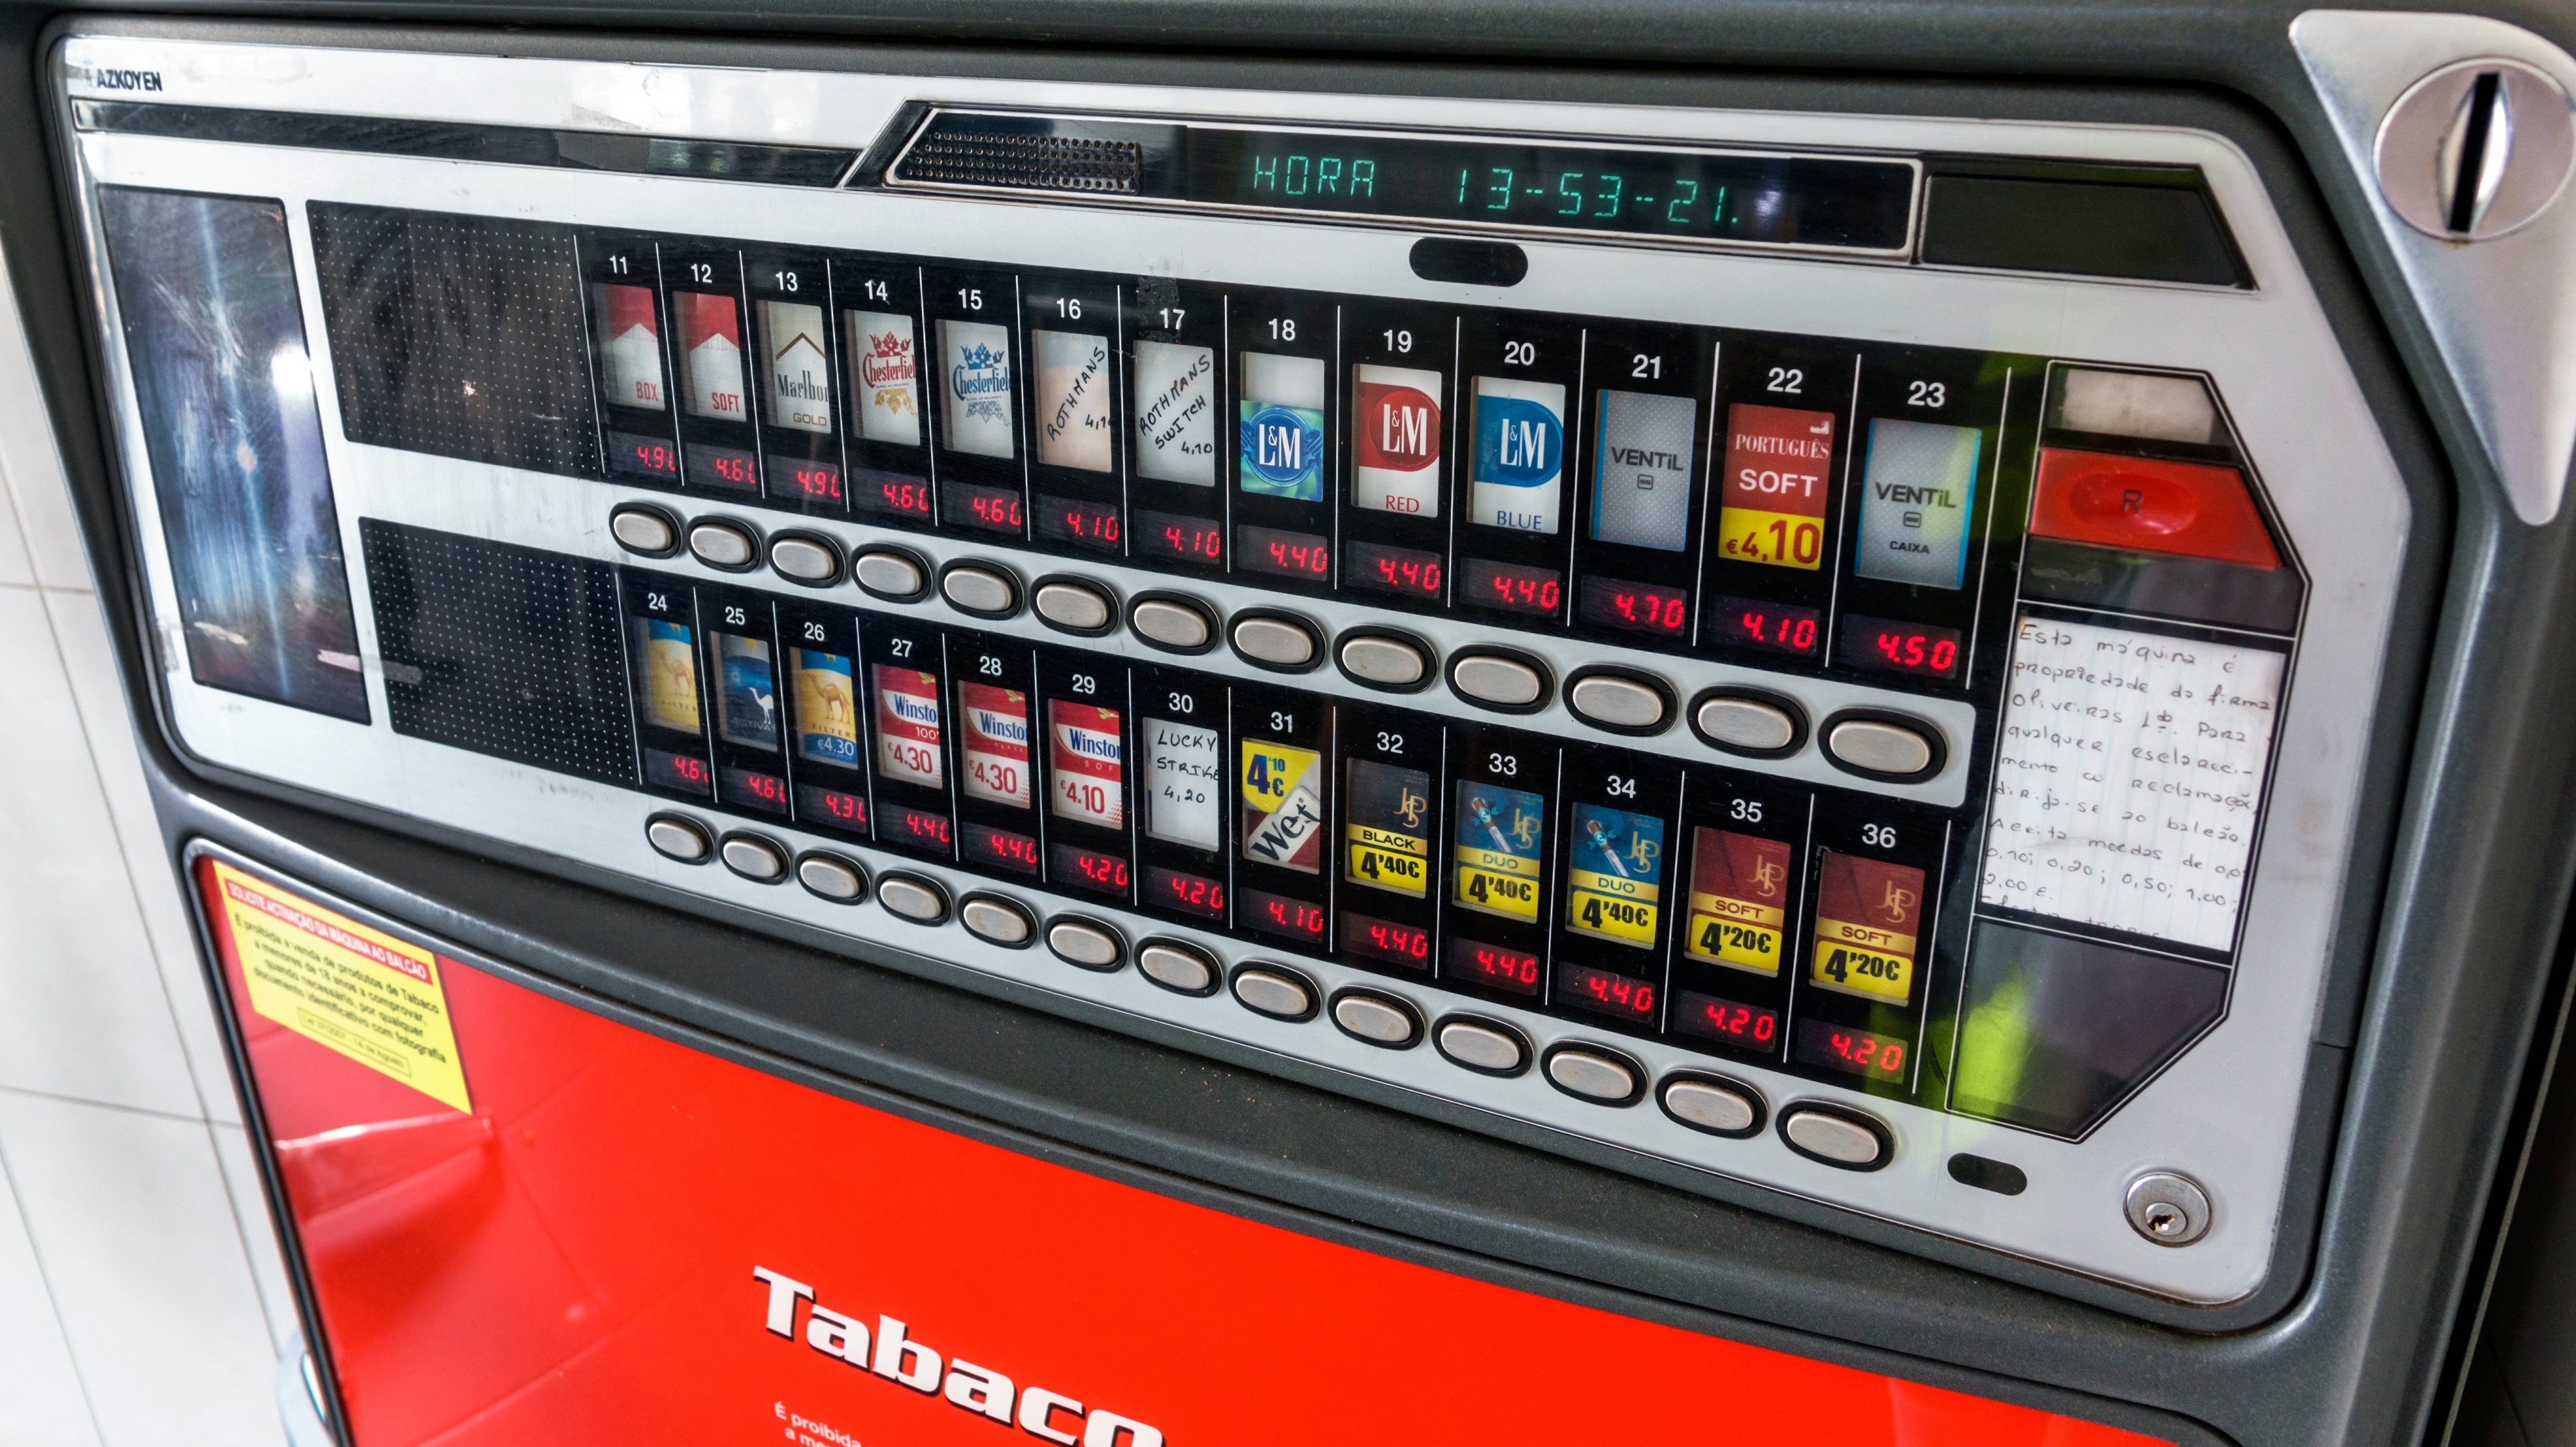 Portugal, Coimbra, Comboios de Portugal, cigarette vending machine in train station